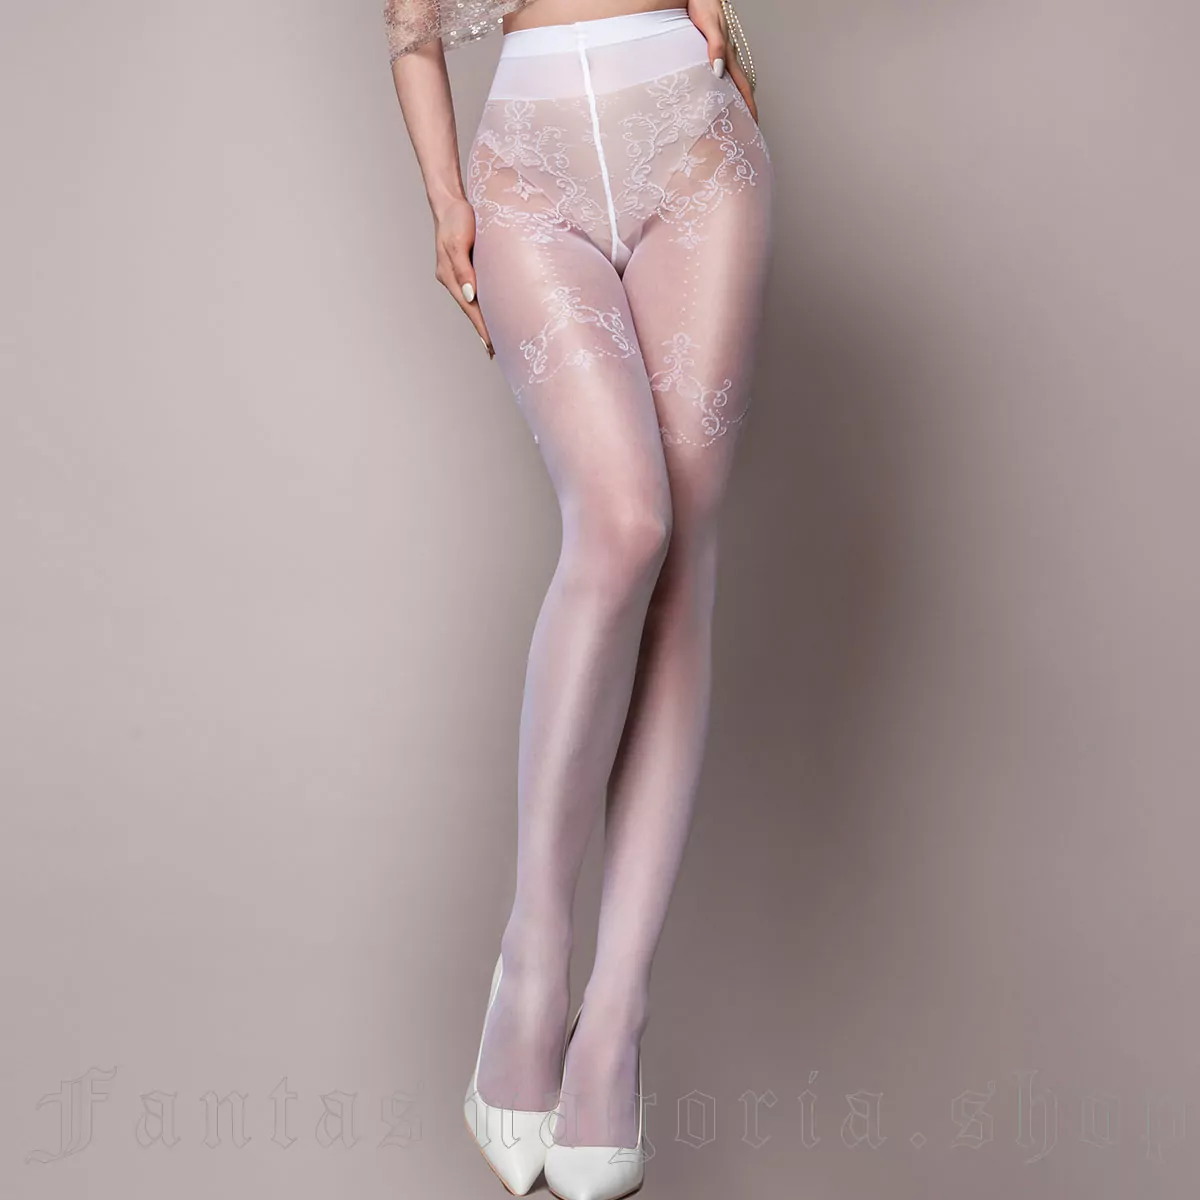 https://fantasmagoria.shop/101051/vampire-s-masquerade-white-tights.jpg